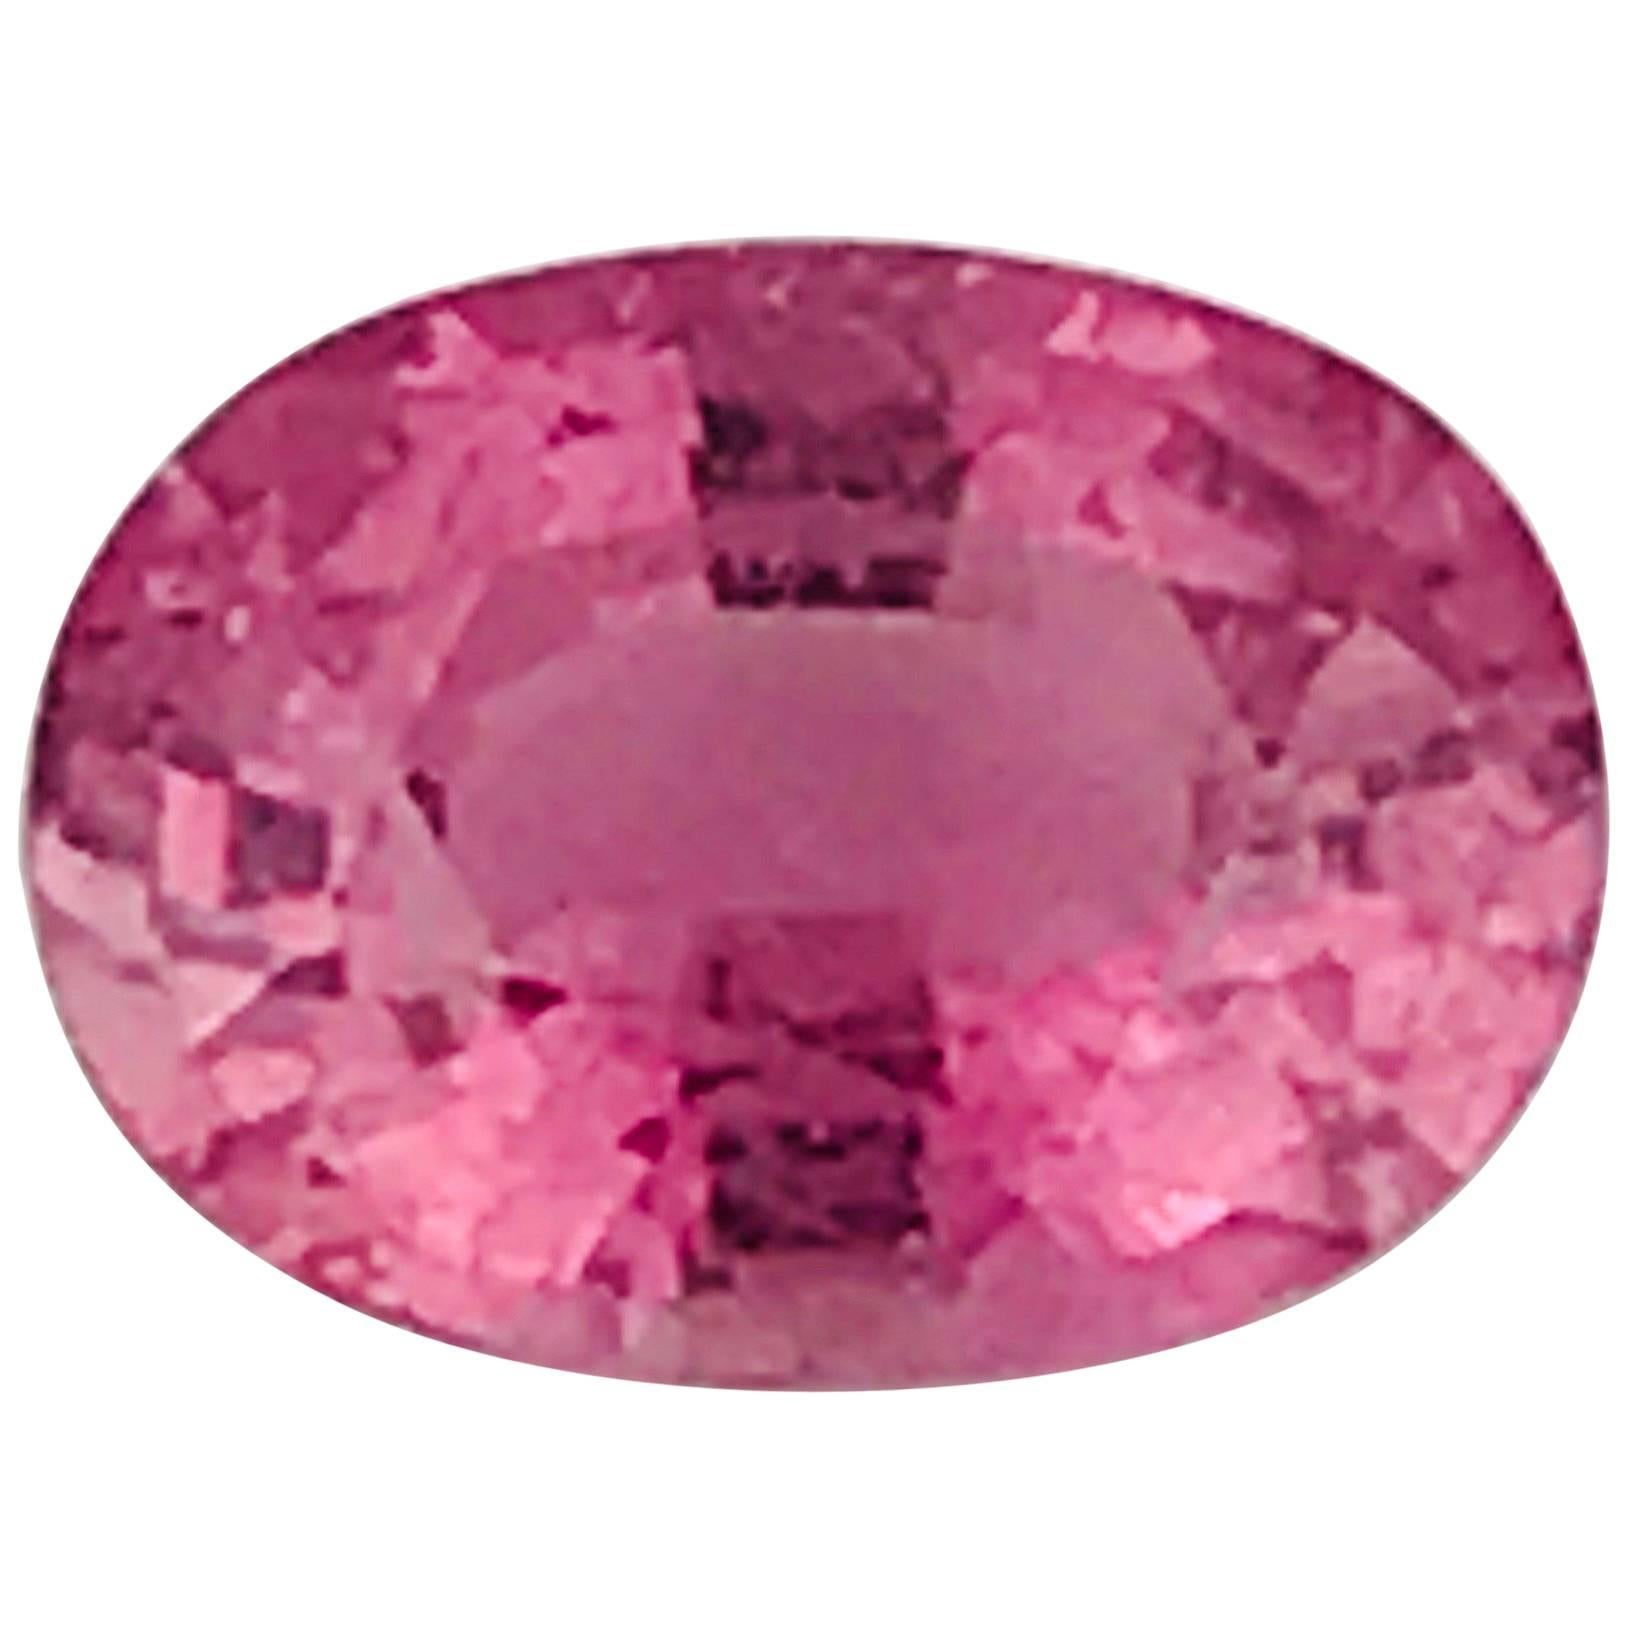 Cuprian Elbaite, Pink 2.13 Carat Tourmaline Gemstone from Mozambique For Sale